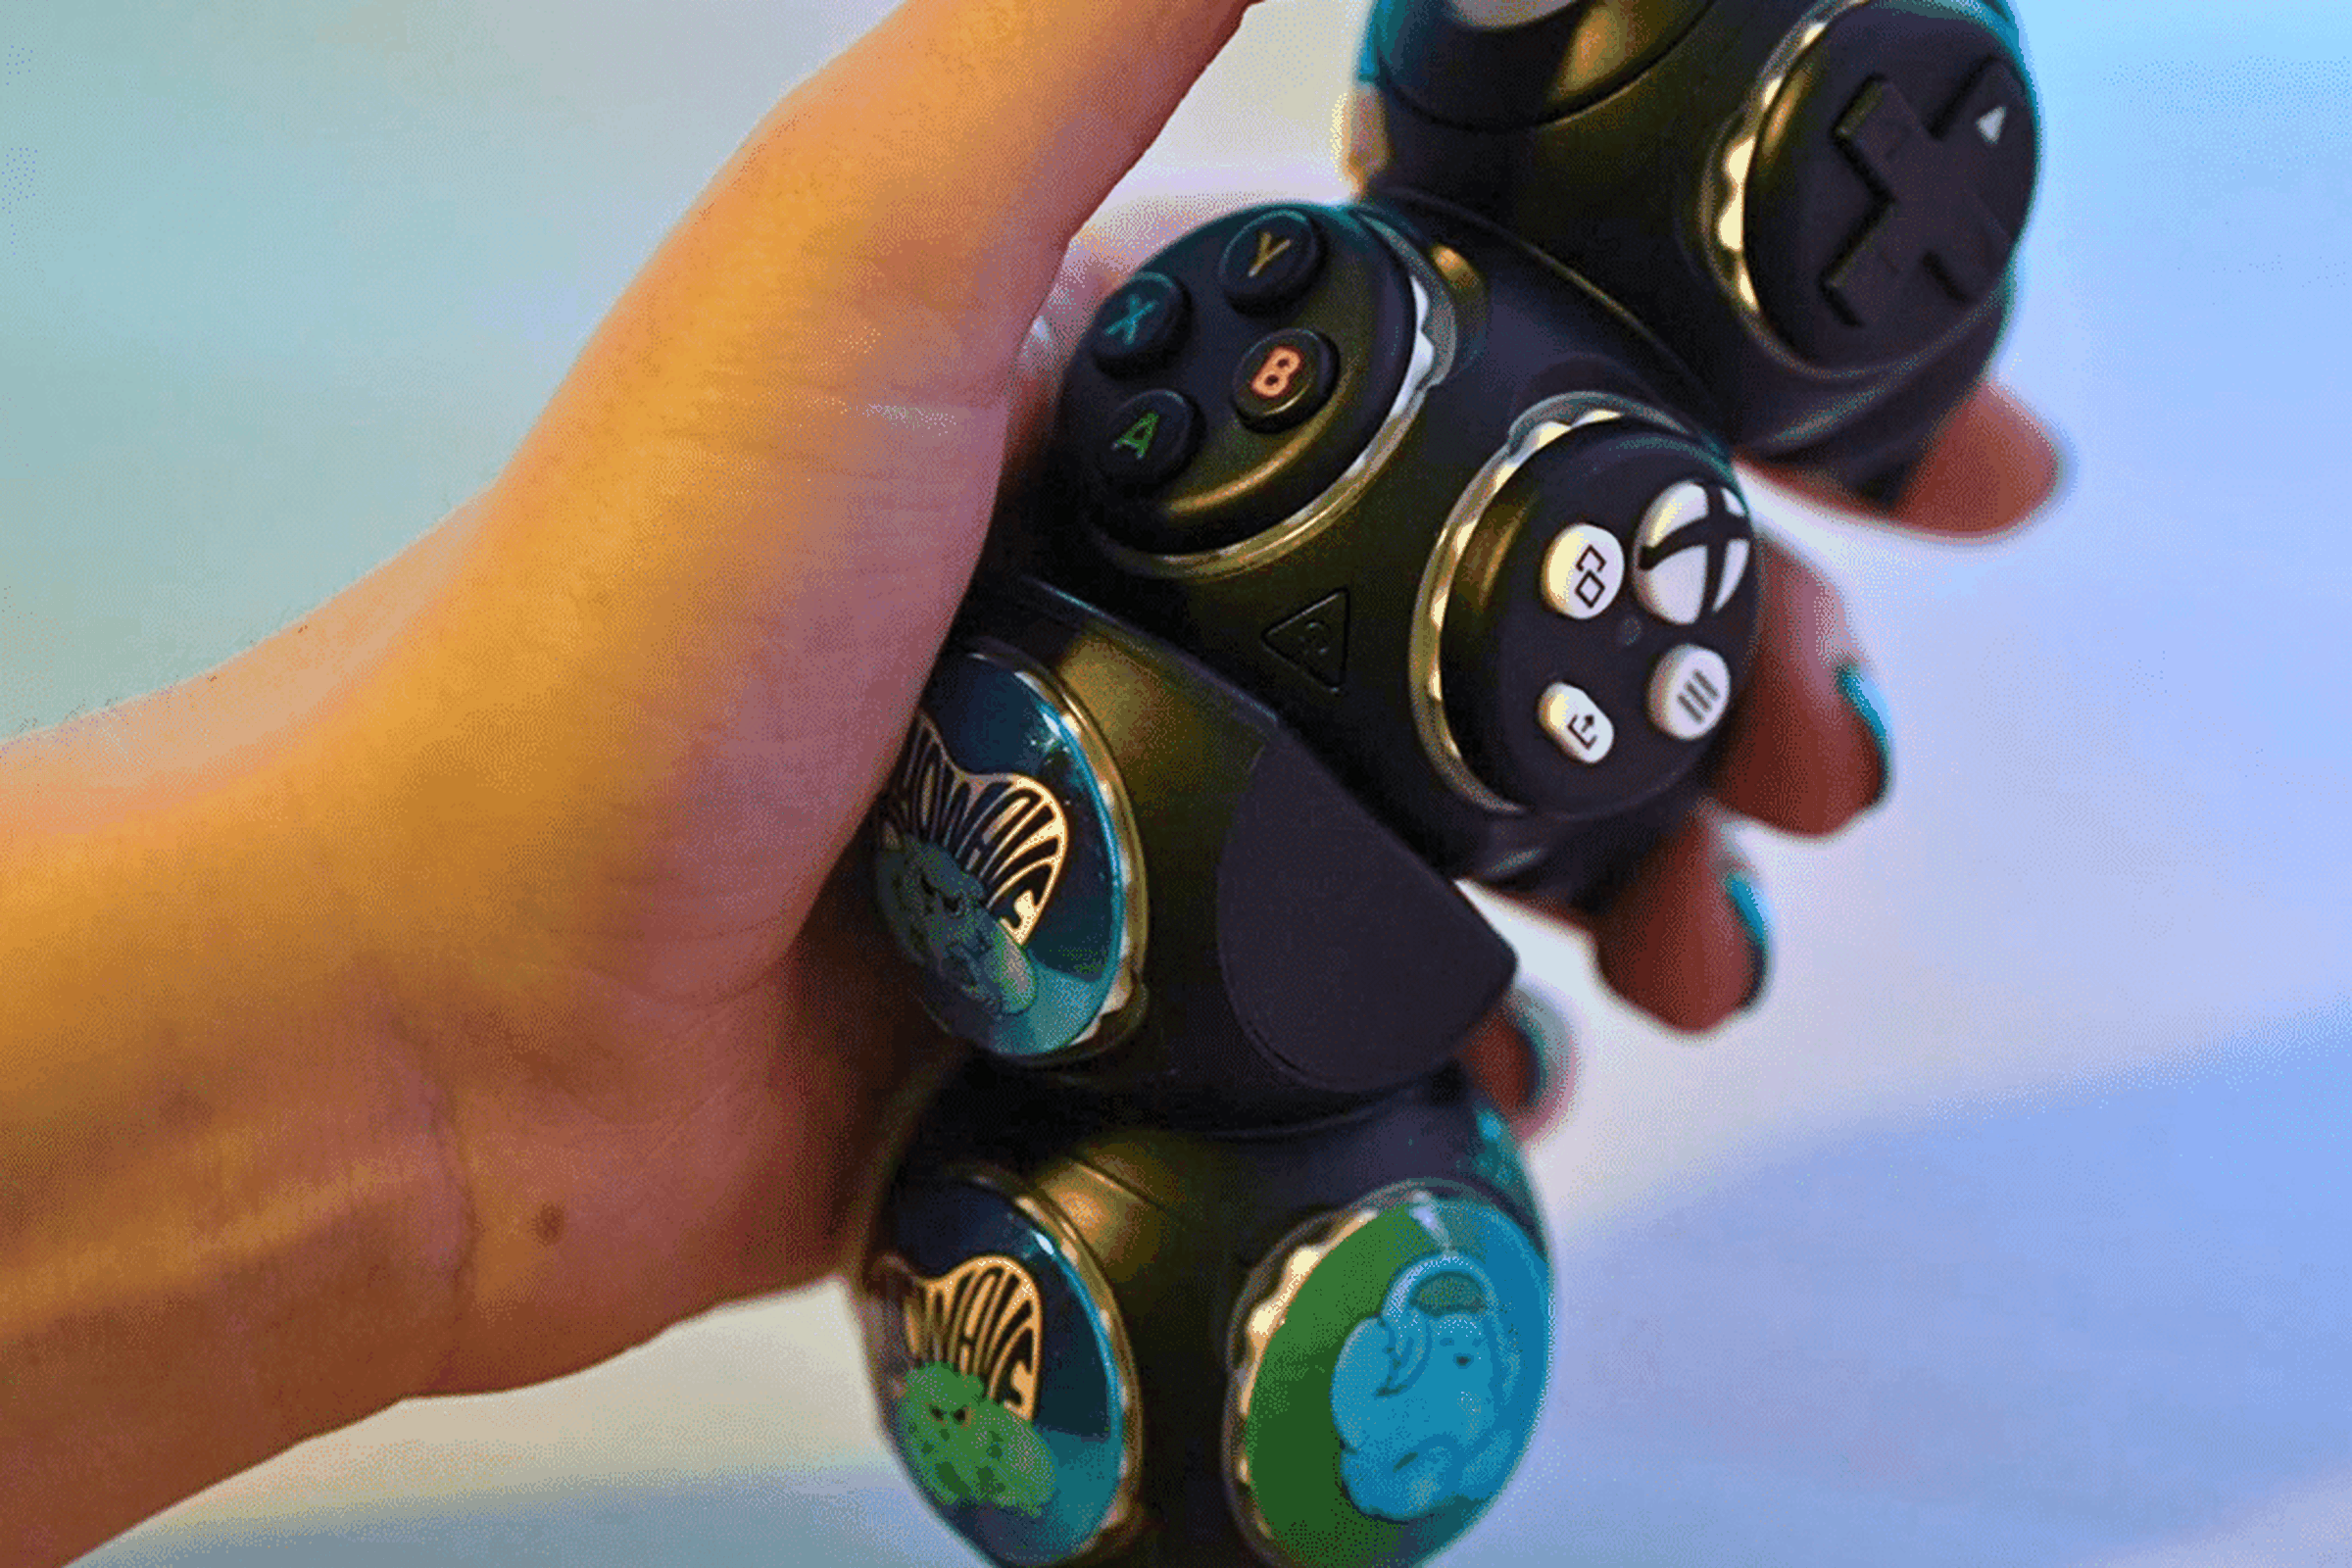 Sebuah tangan memegang Proteus Controller, yang terdiri dari kubus modular.